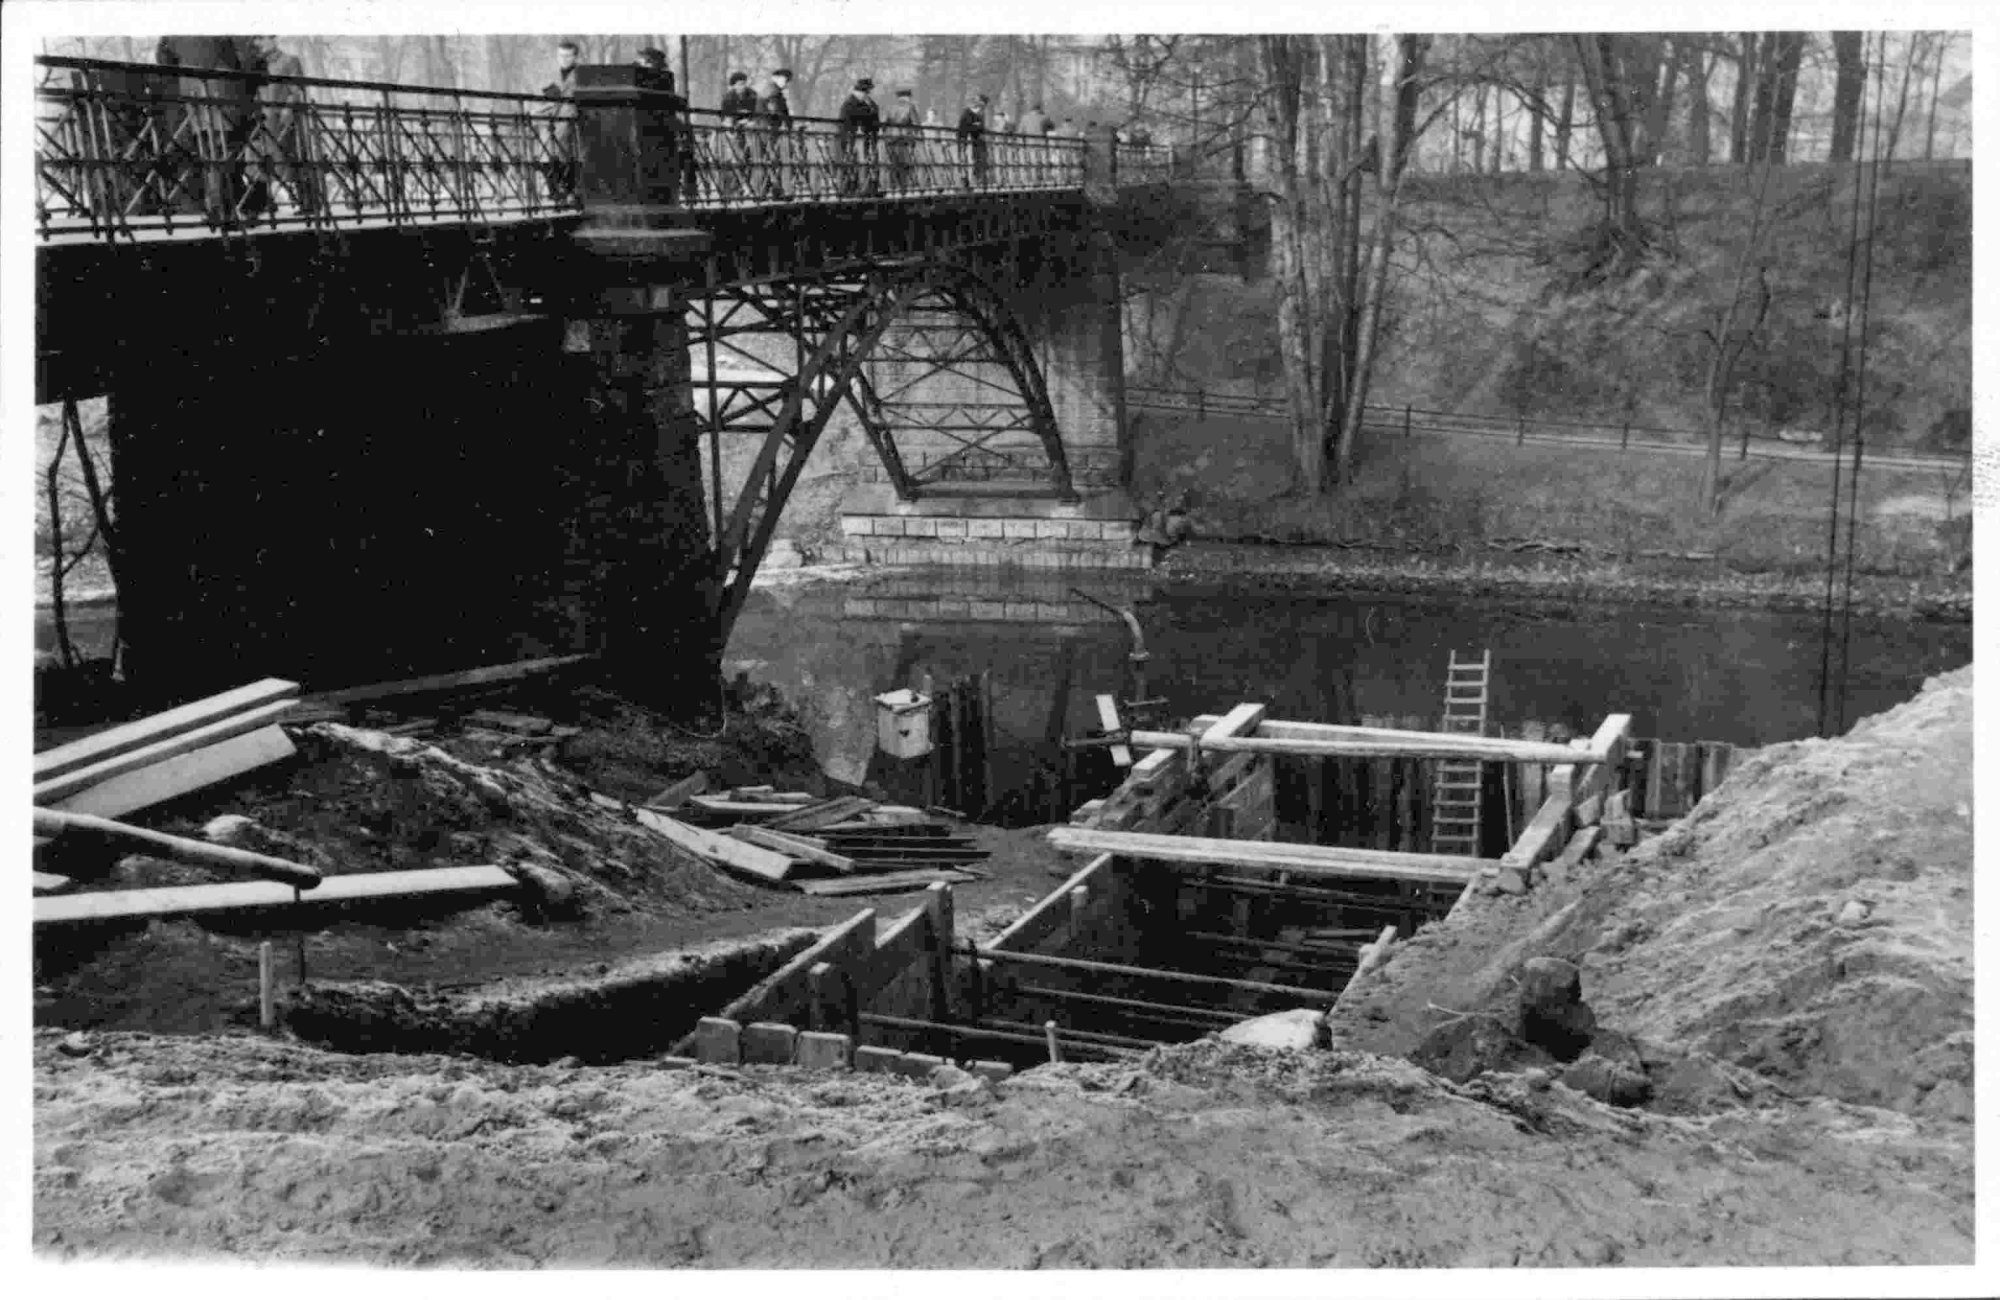 Ottmerbrücke, Ostansicht mit Fundament der Brücke Kurt-Schumacher-Straße, 1958